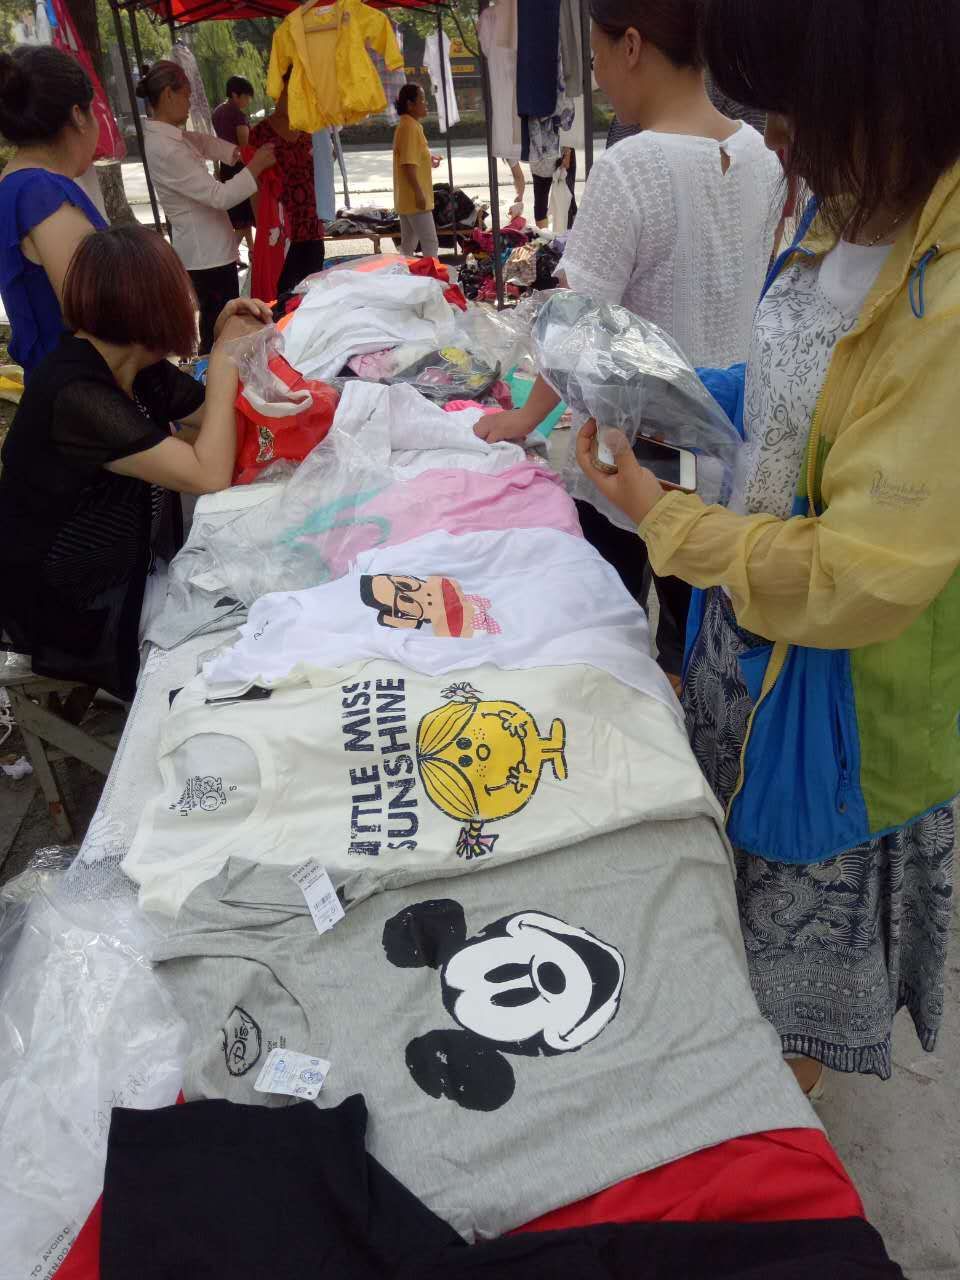 The charity bazaar of Wuzhong Church held on Aug. 14, 2016